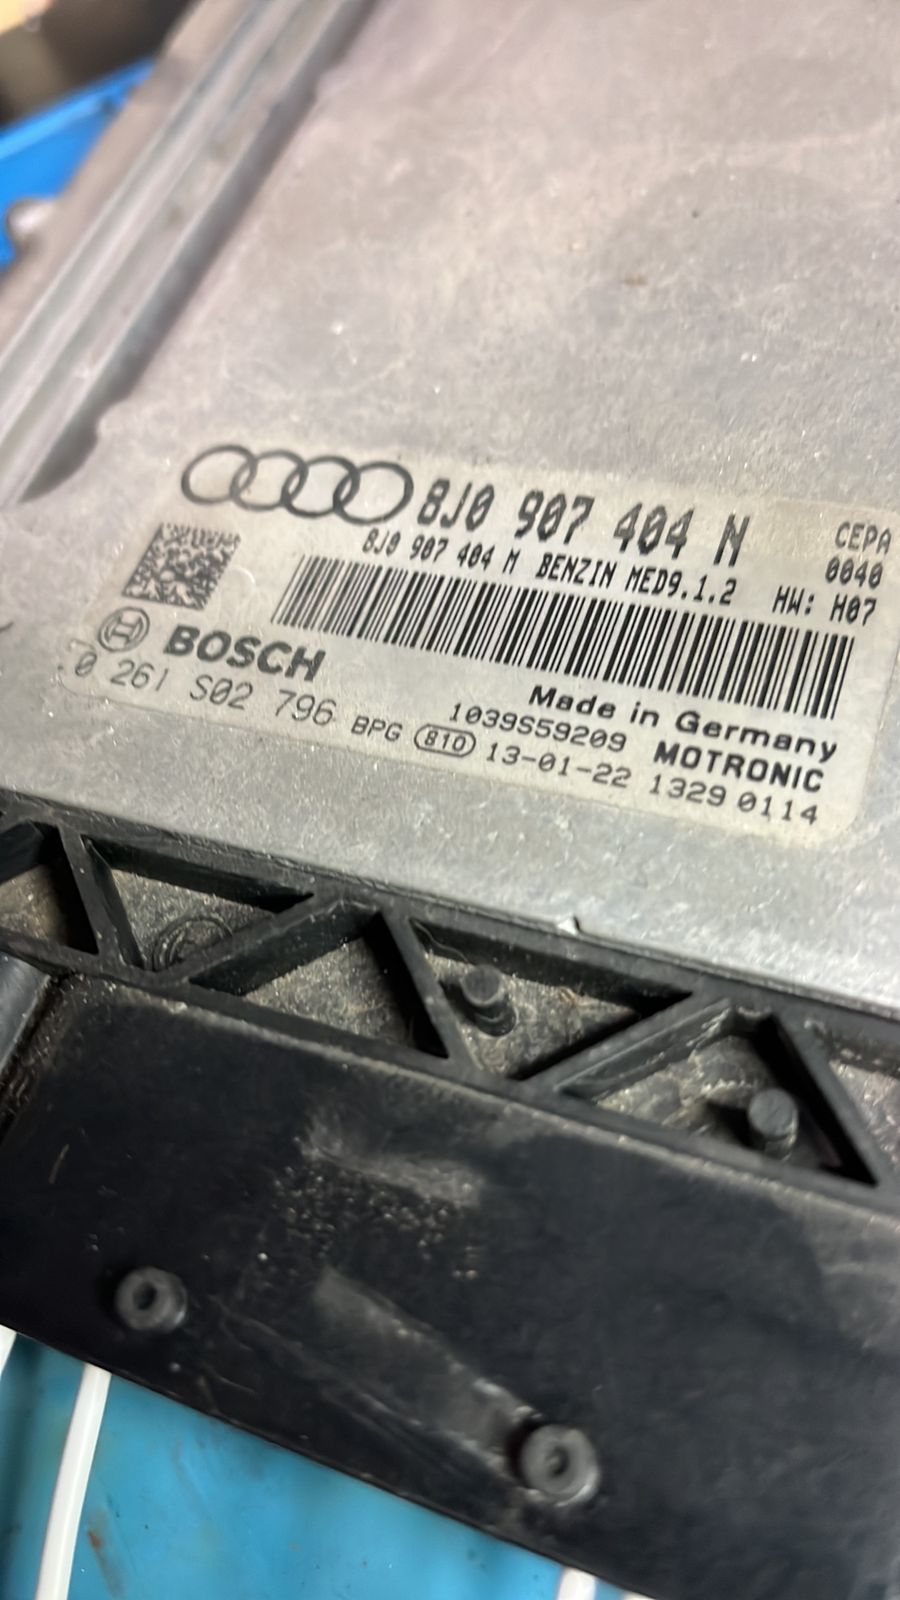 KT200 Bench Read / Write Audi MED9.1.2-01